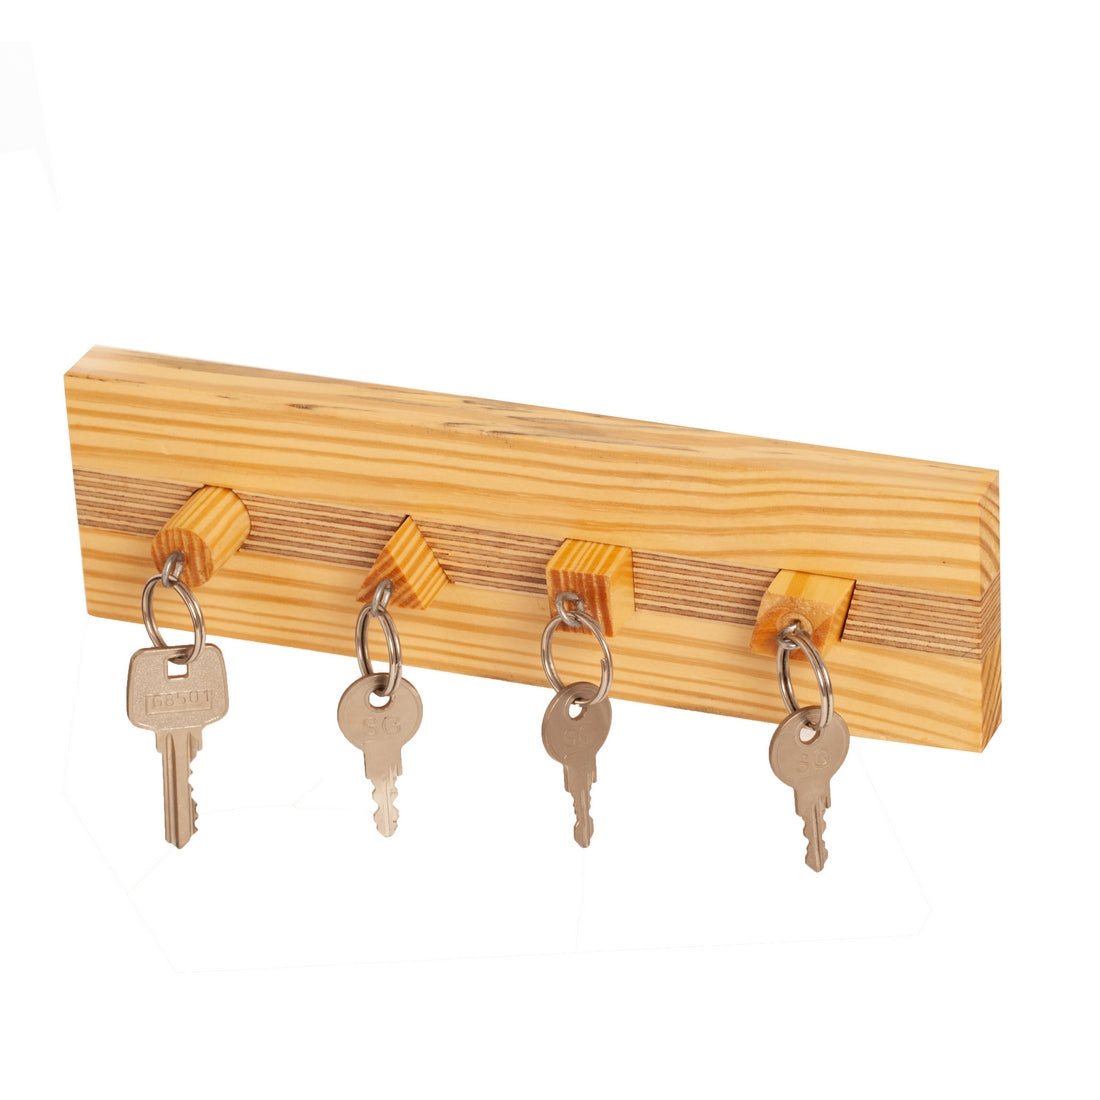 Key Holder Mobile Holder Wall Hanger for Hanging Keys & Key Chains Best Key  Holder for Home furniture wall Decor